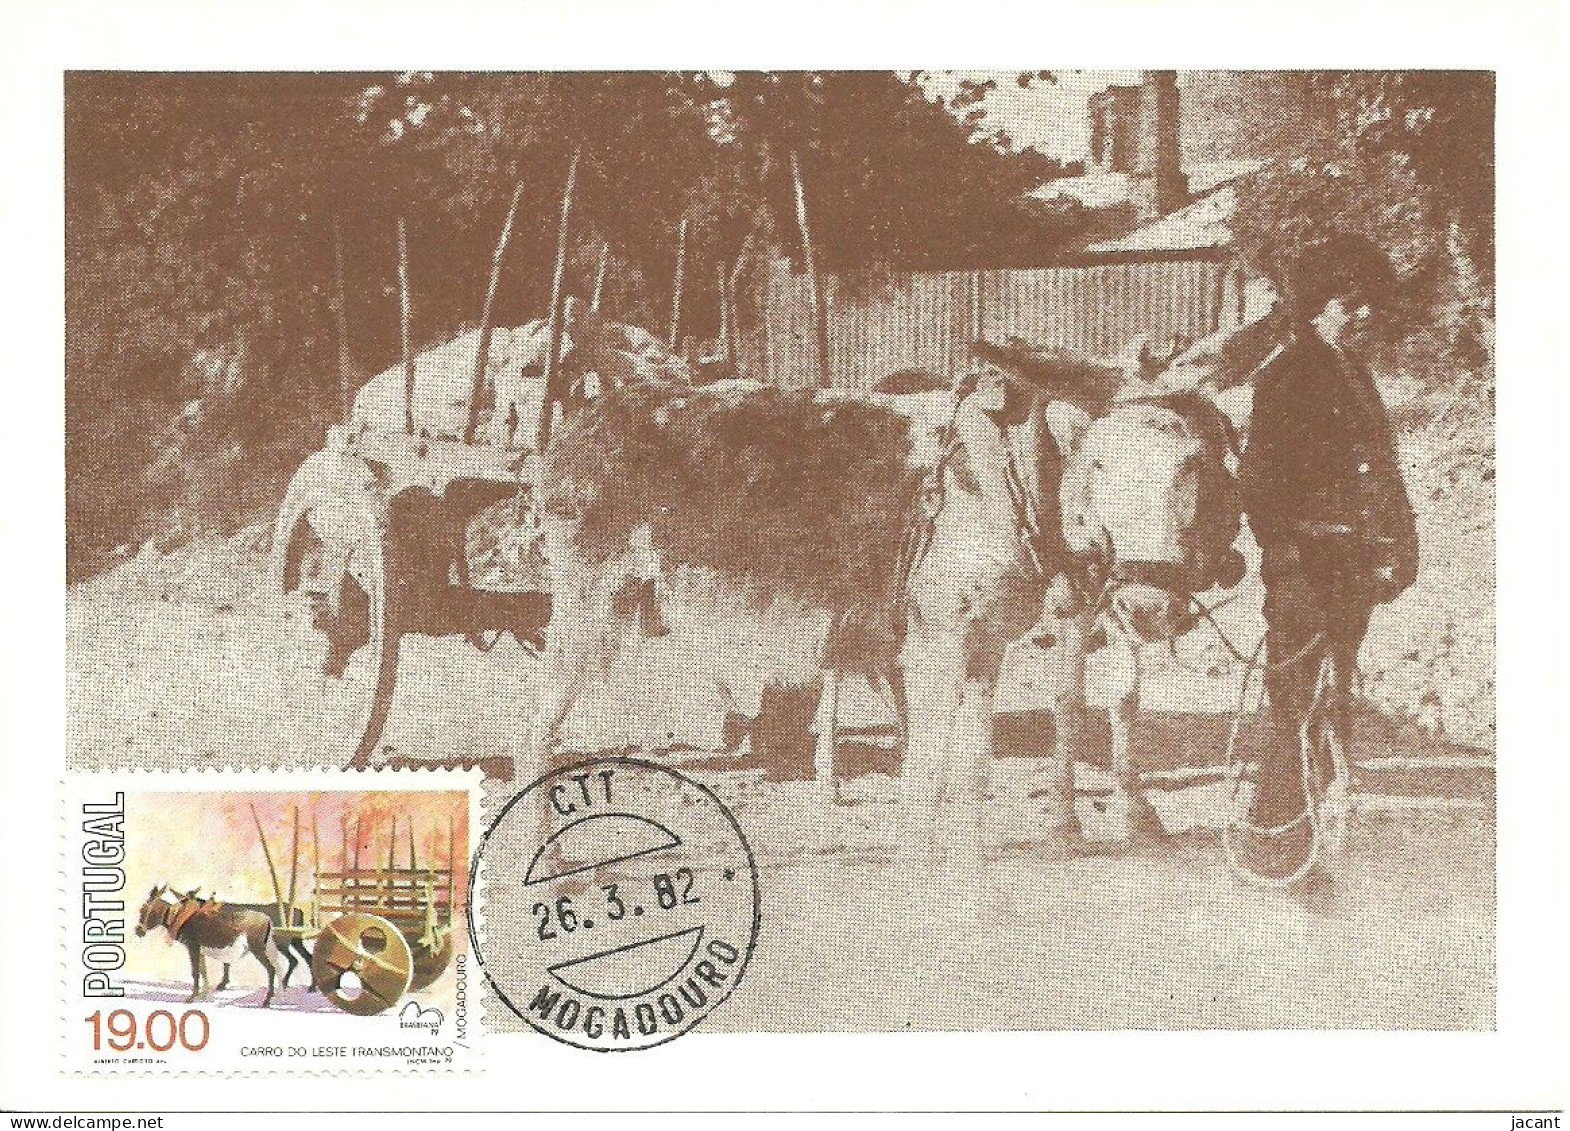 30840 - Carte Maximum - Portugal -  Lubrapex Carro Leste Transmontano Burros - Chars à ânes - Donkey Cart - Cartes-maximum (CM)